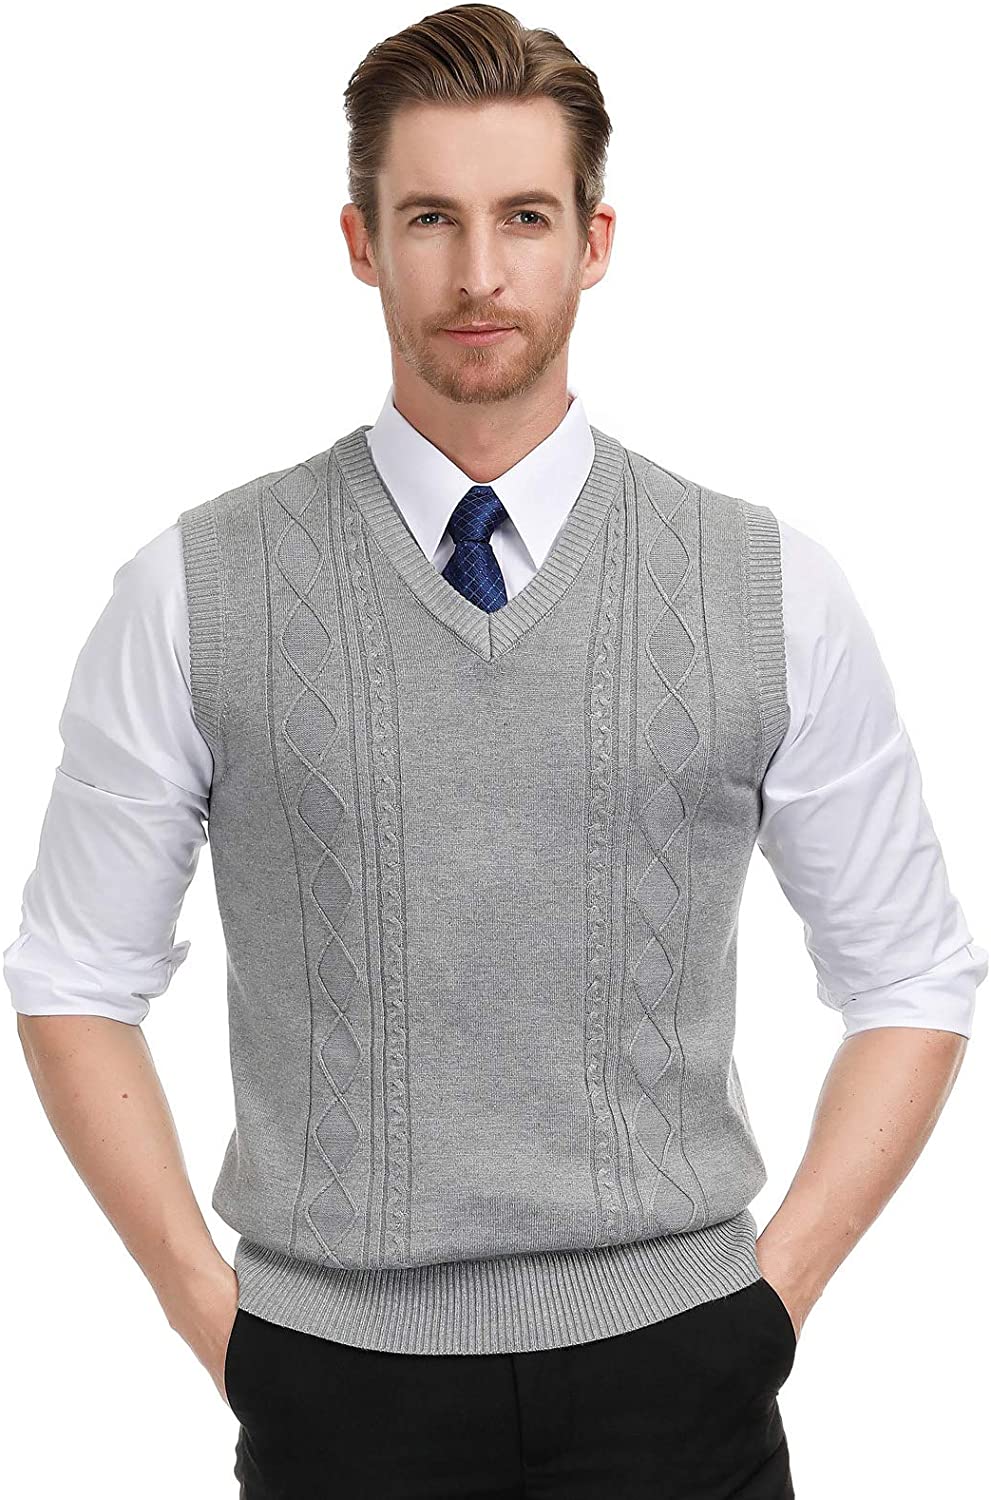 PaulJones Men Vintage Sweater Vest Stylish V-Neck Sleeveless Sweater Pullover Knitwear 